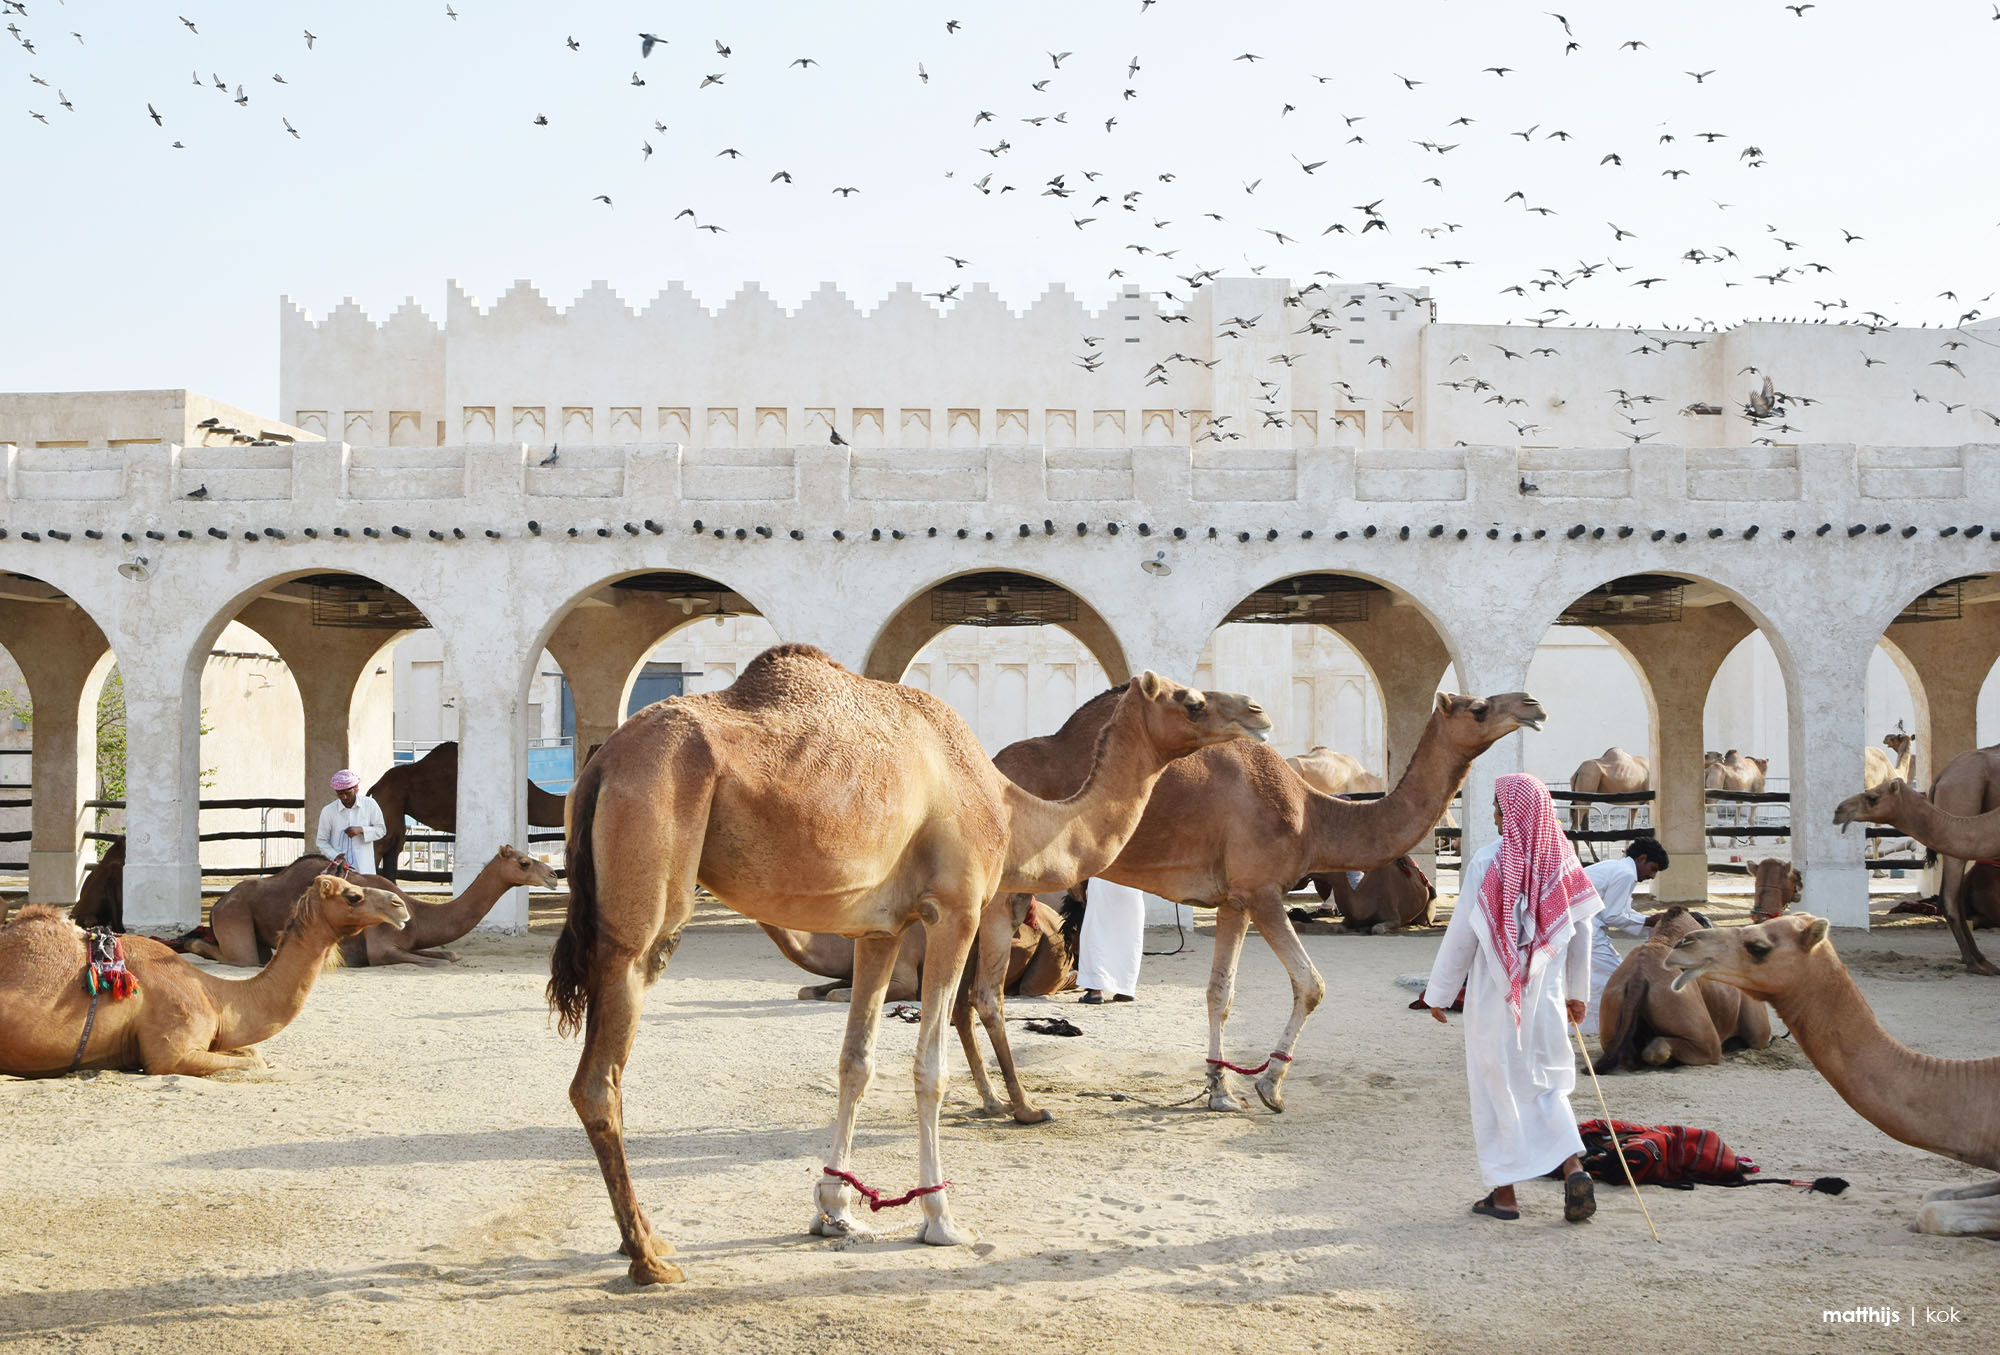 Camel Pen, Souq Waqif Doha, Qatar | Photo by Matthijs Kok